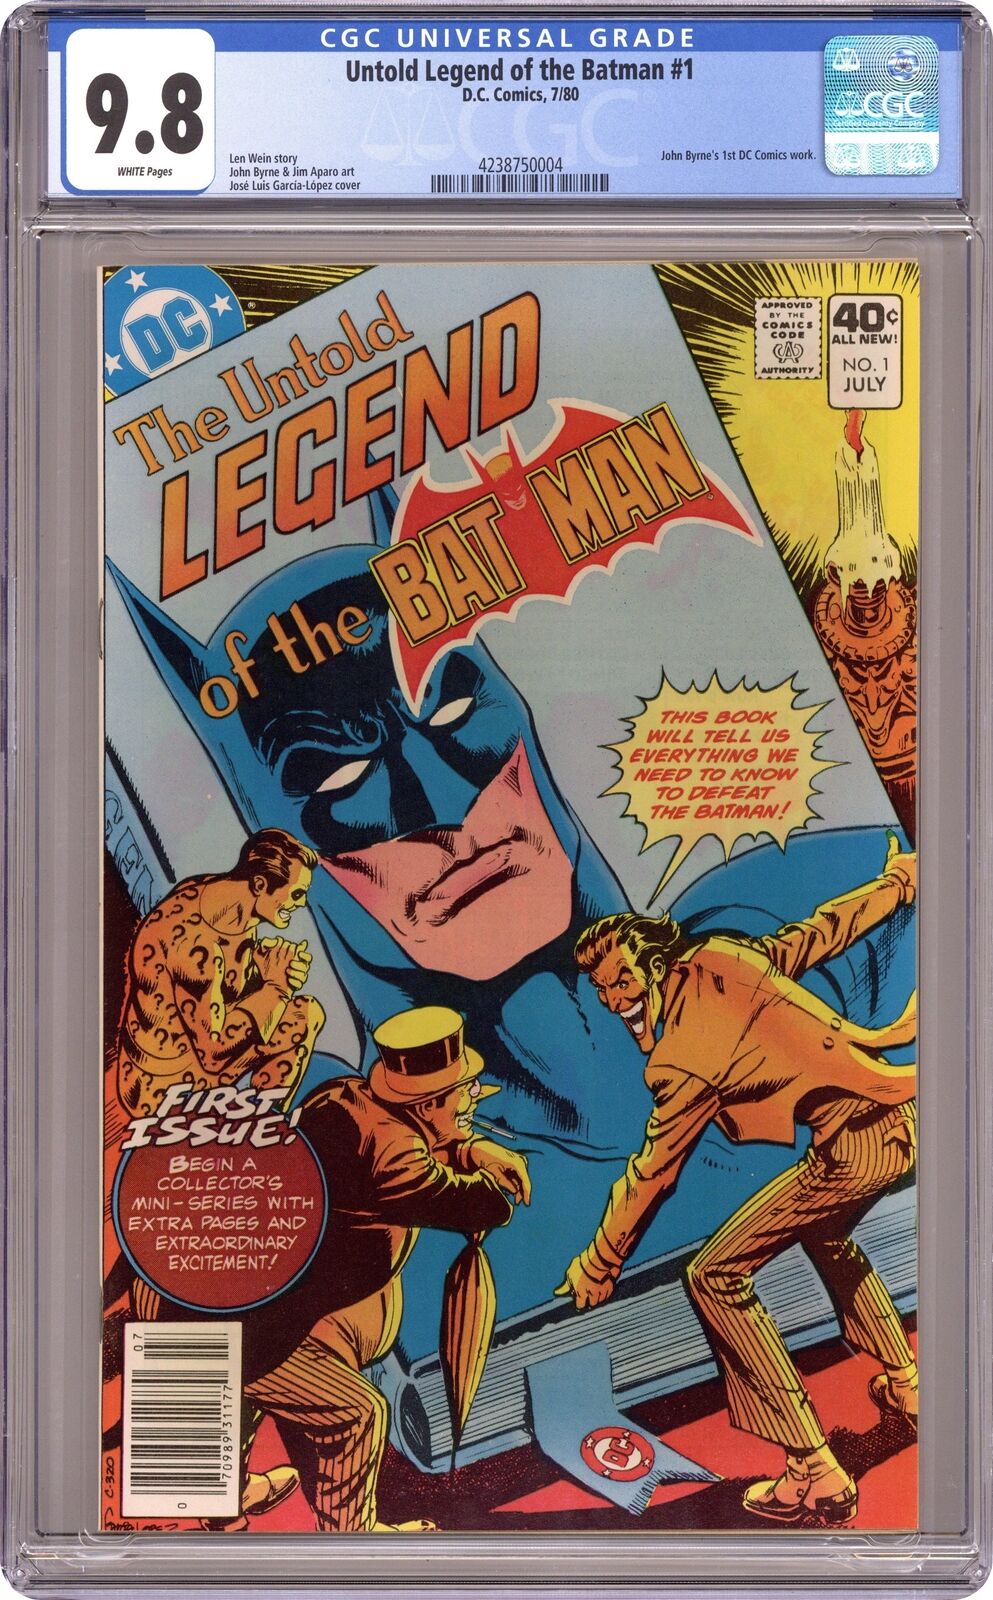 Untold Legend of the Batman #1 CGC 9.8 1980 4238750004